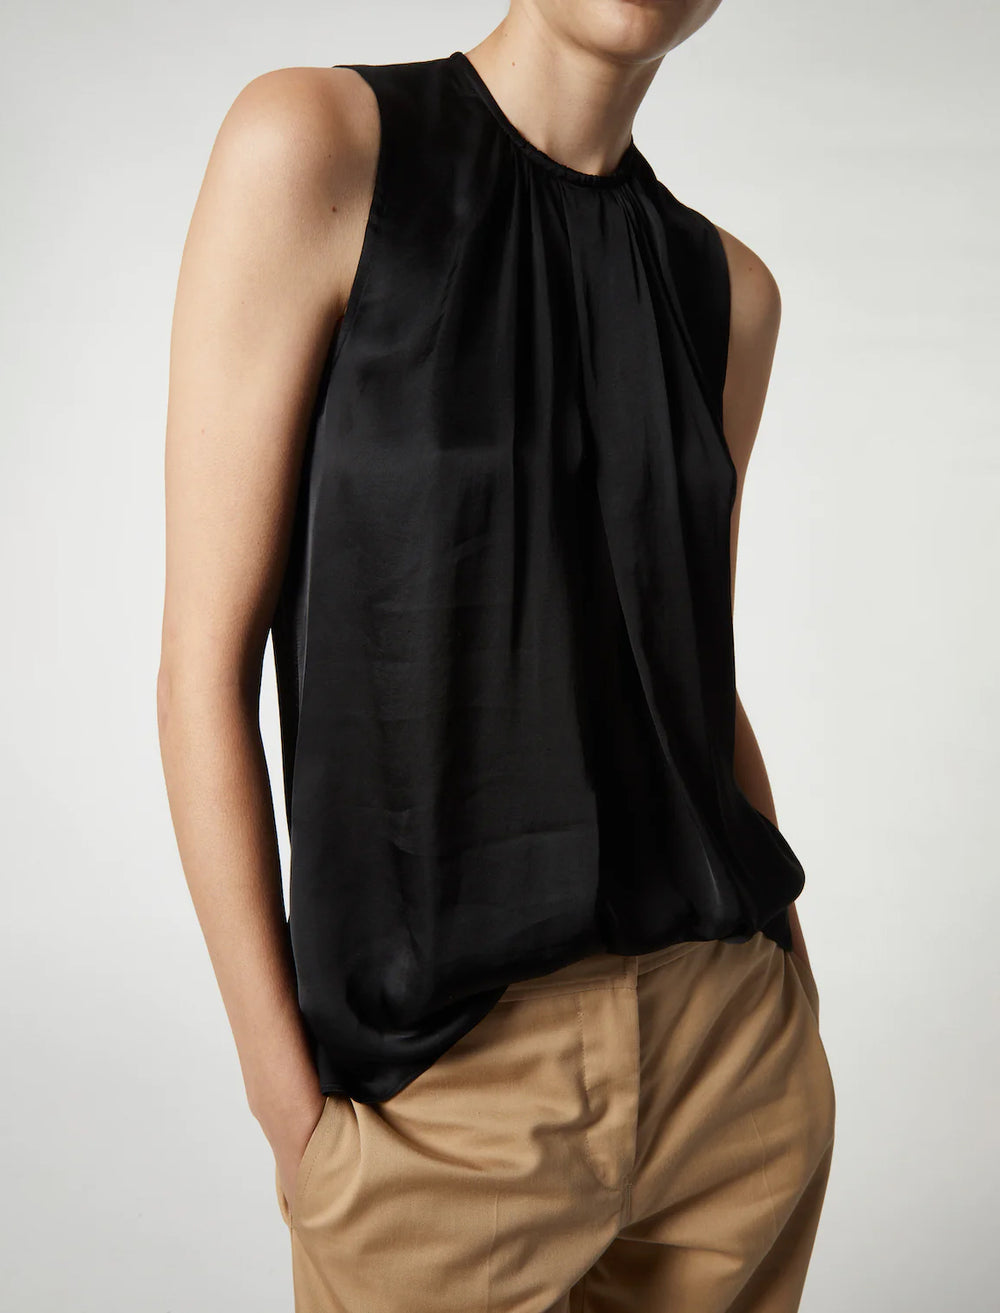 Model wearing Saint Art's sadie sleeveless blouse in black.